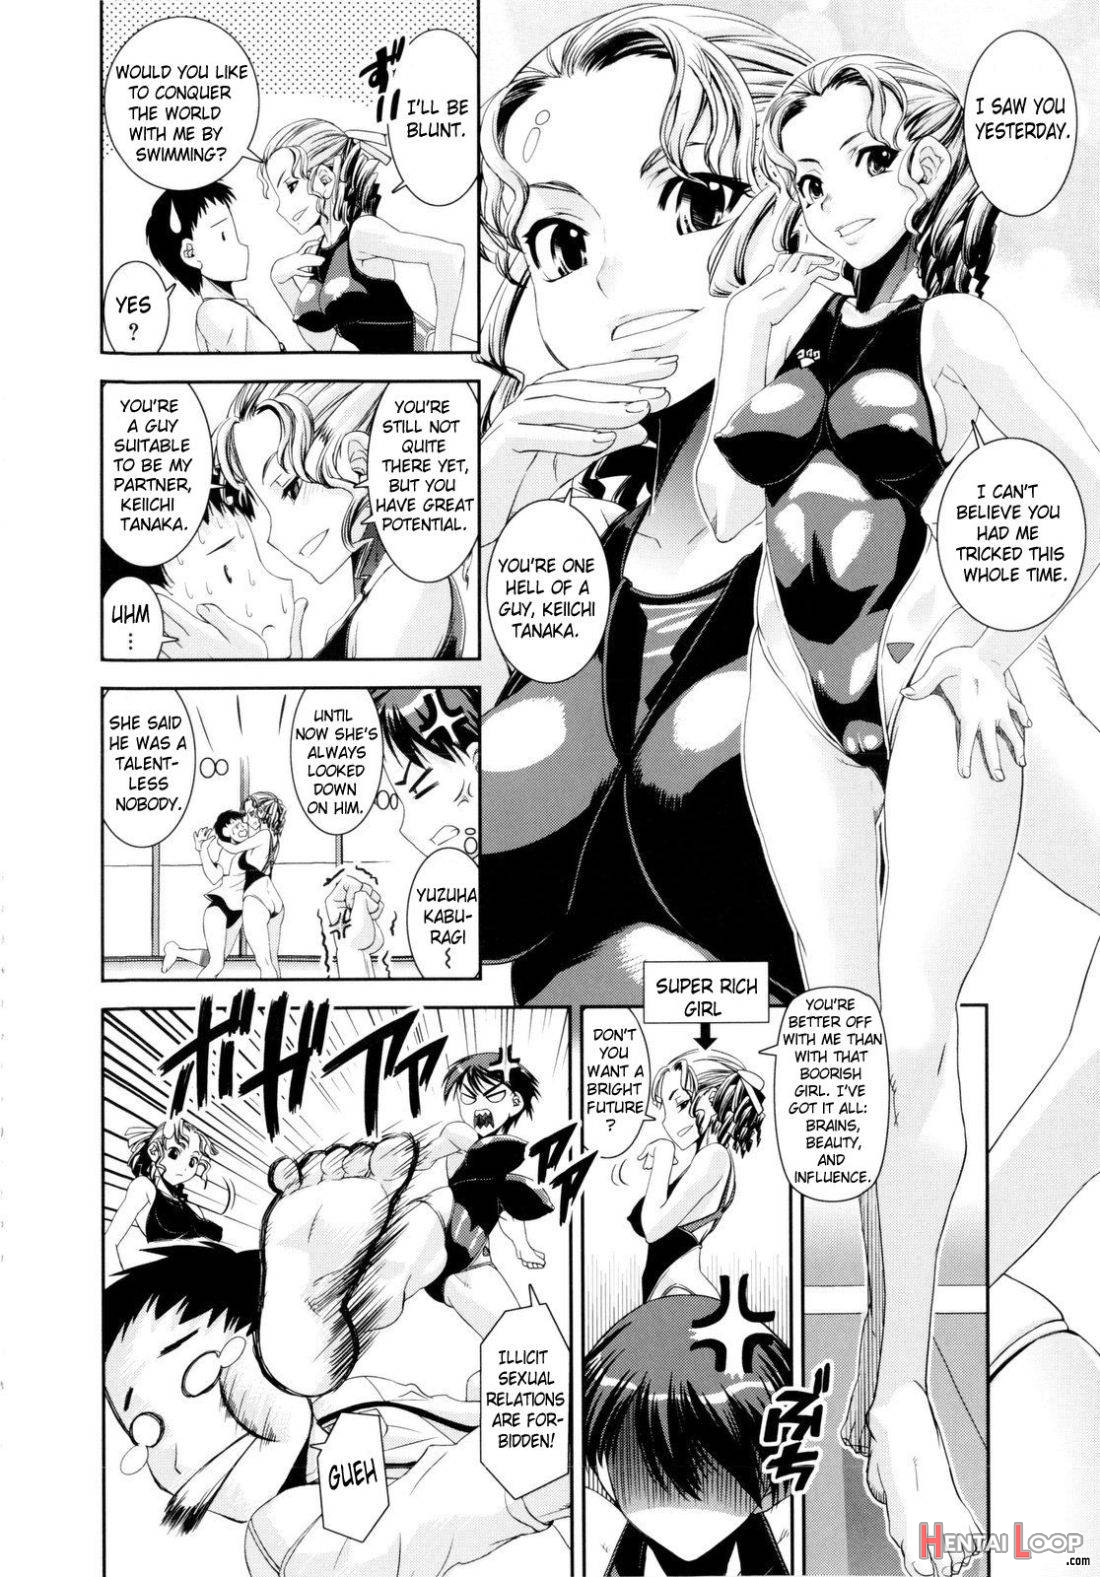 Kyouei! page 7